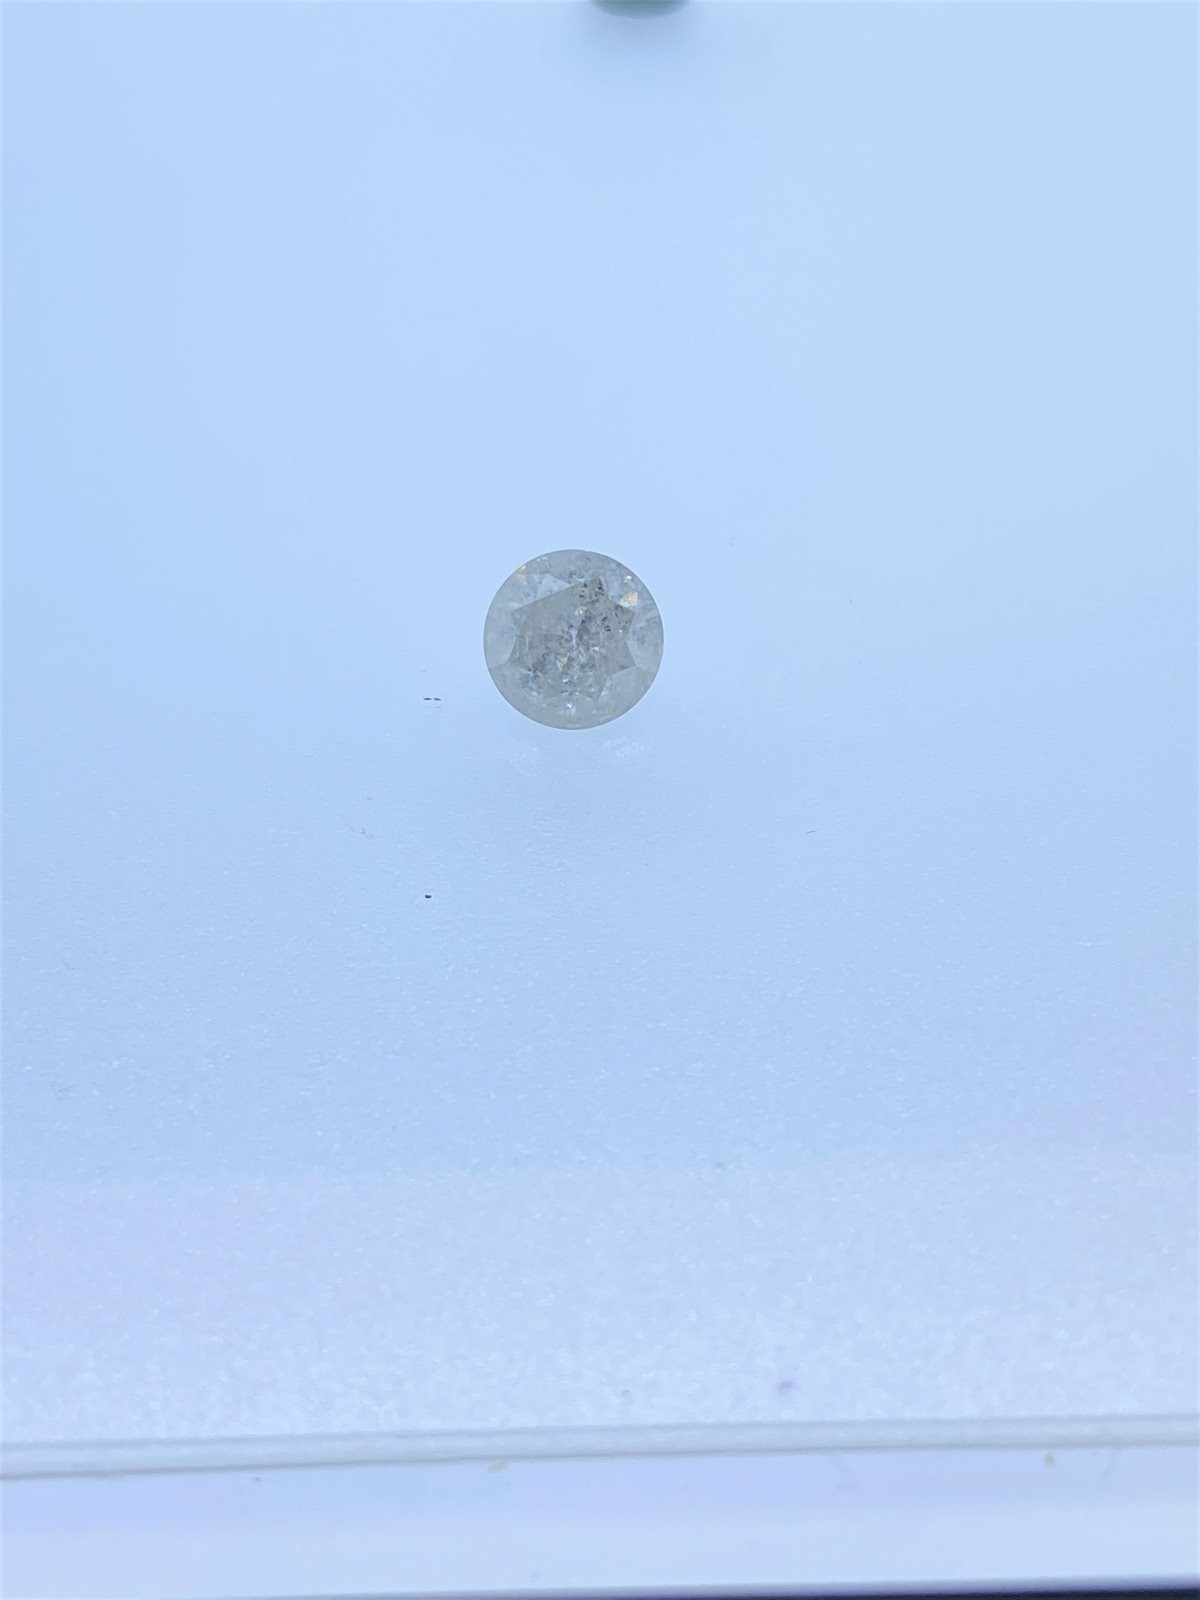 White Salt N Pepper Round Diamond - 1.62 carats